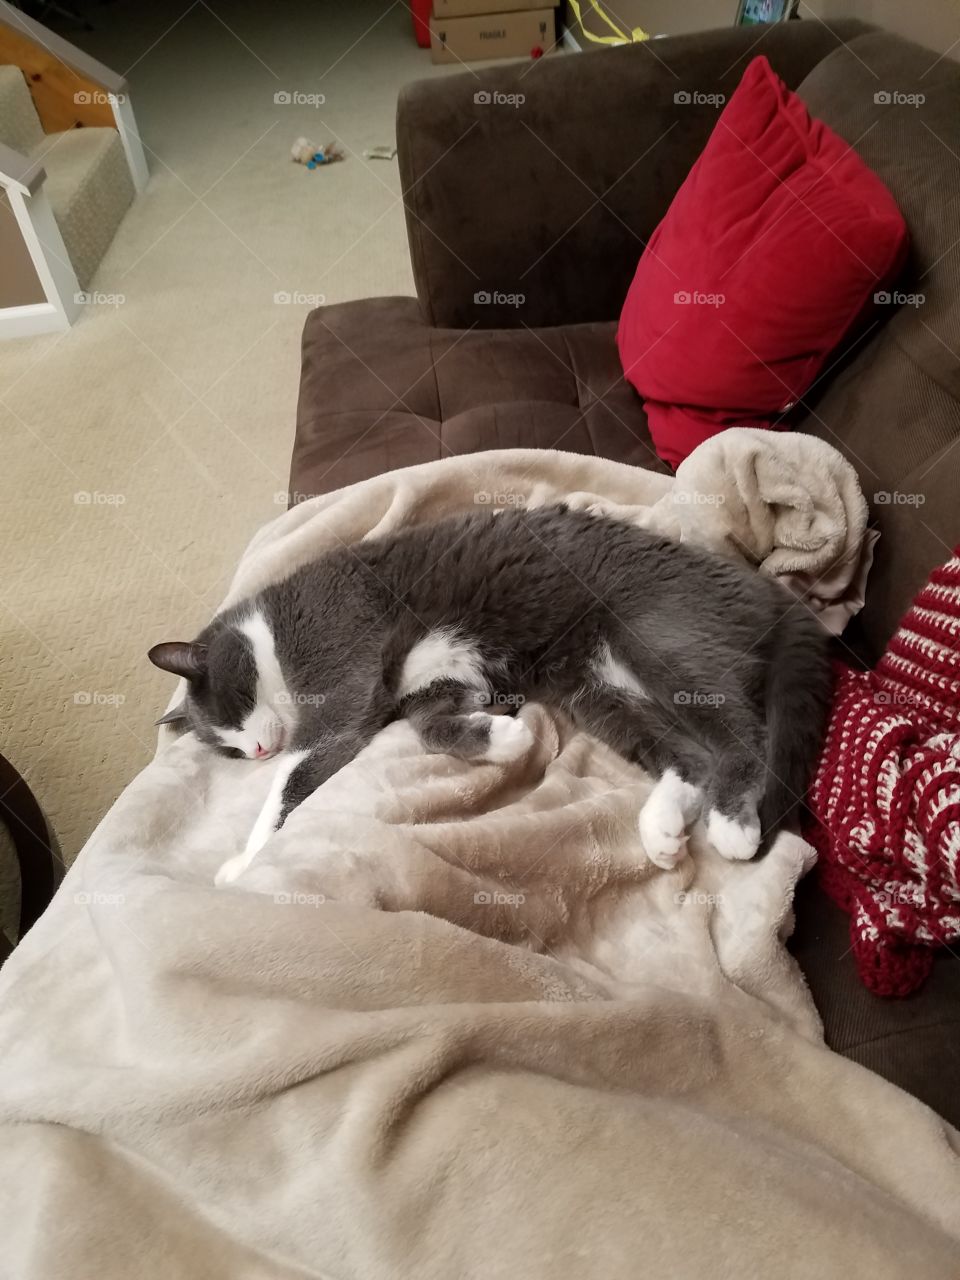 Jasper sleeping on a blanket